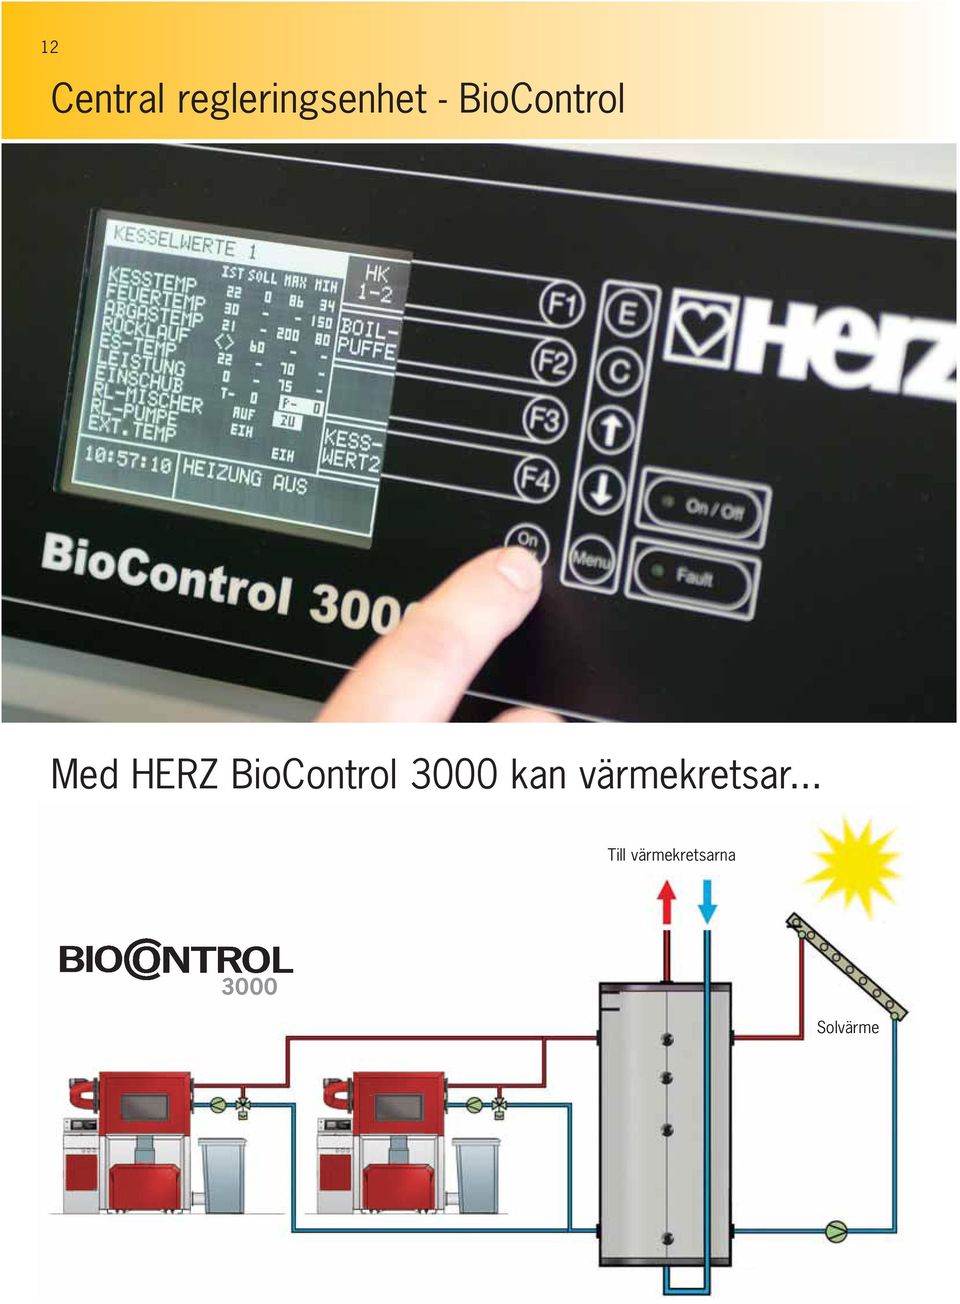 BioControl 3000 kan